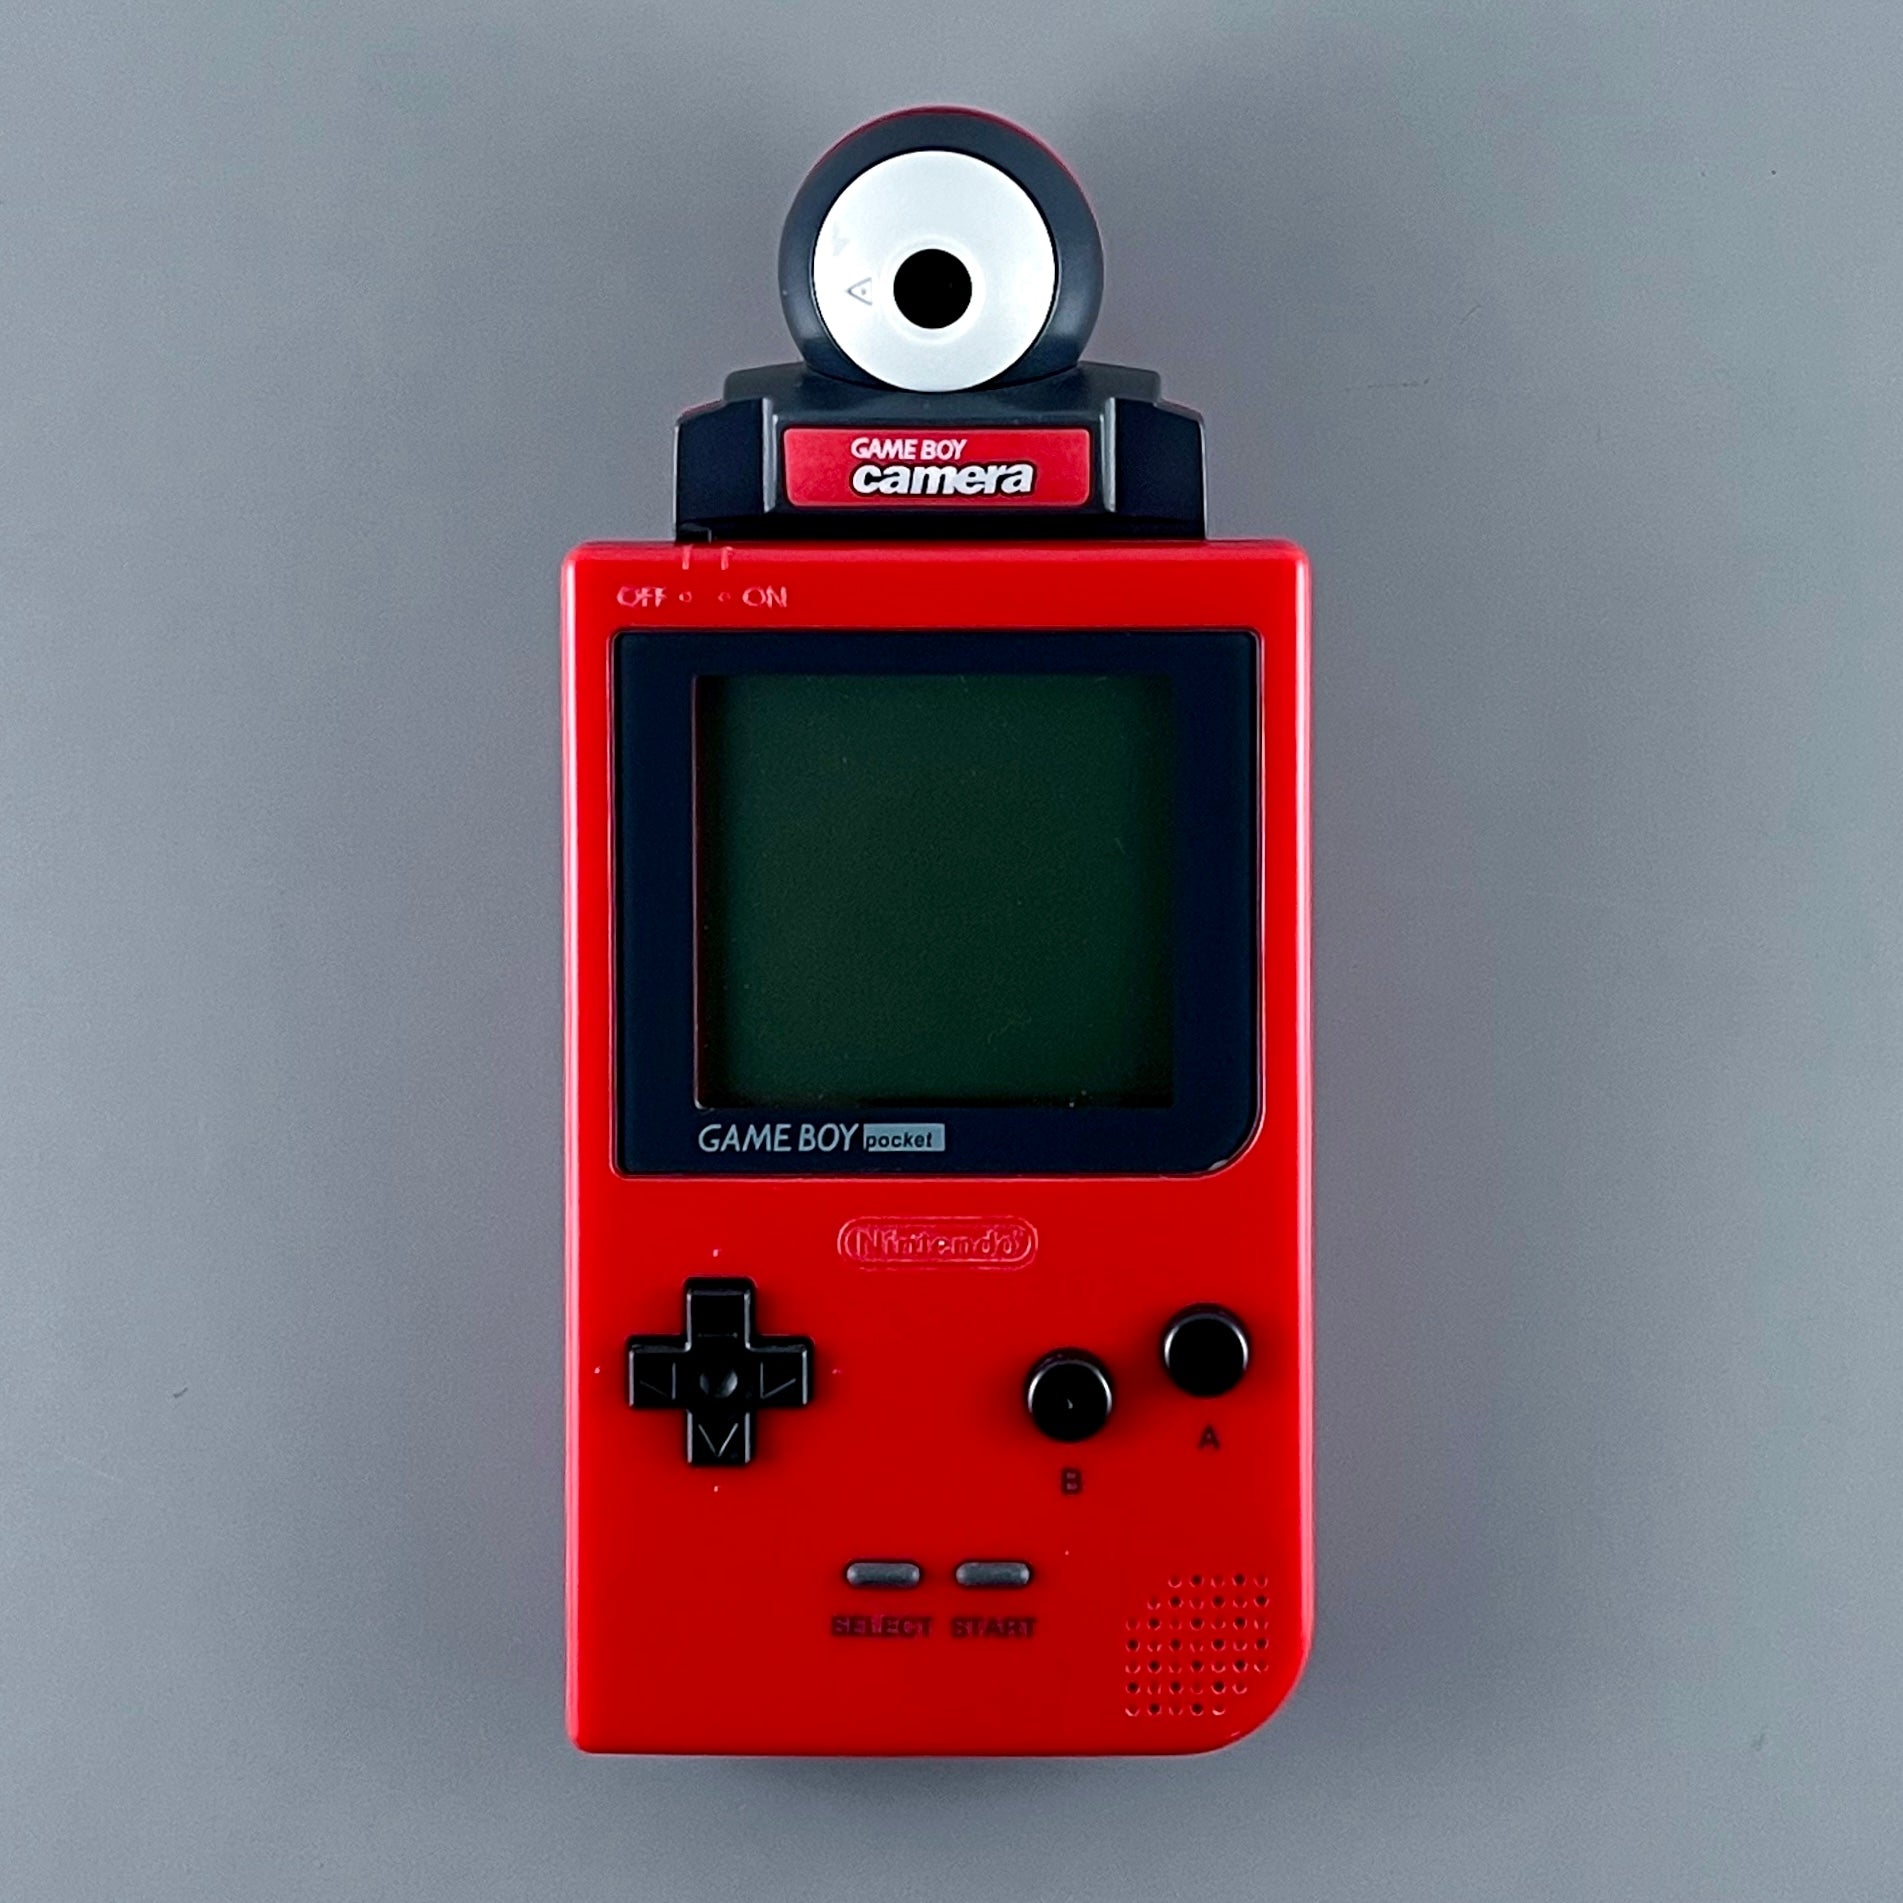 Nintendo Game Boy Pocket & Camera - Red Console - 1904 Comics